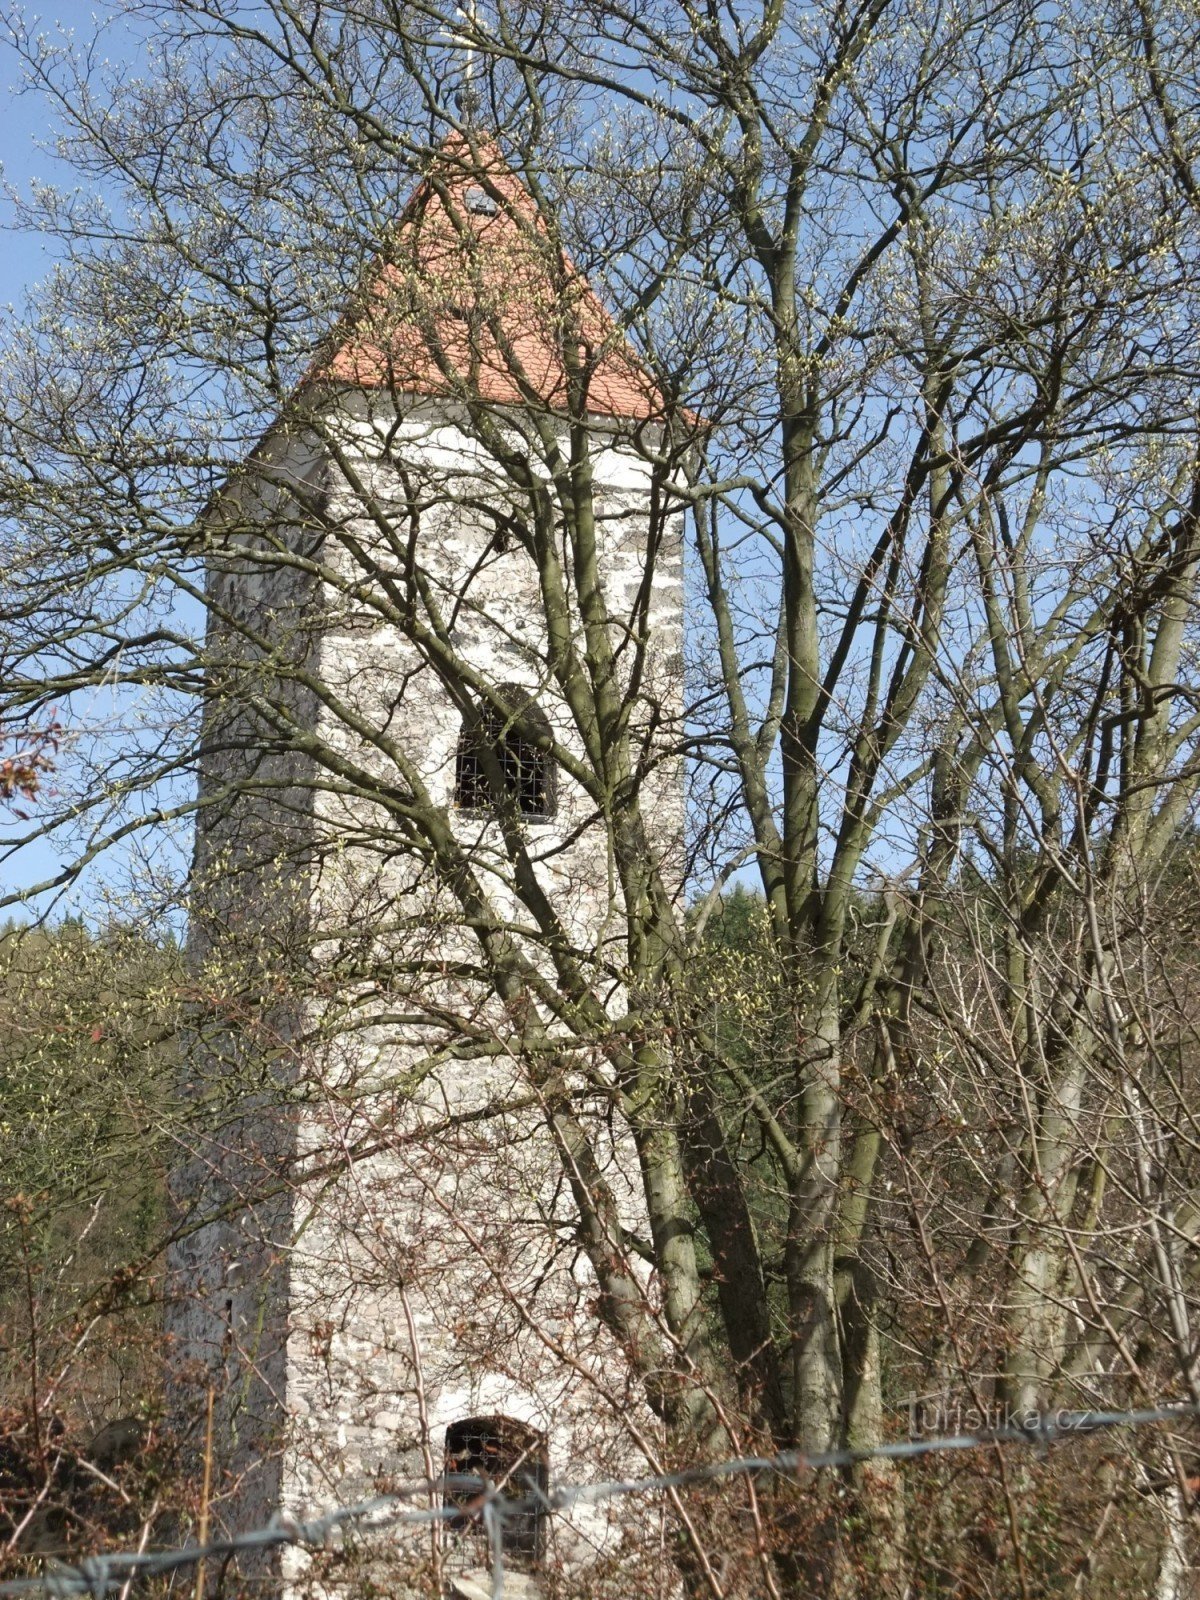 Torre del castello a Nejdek